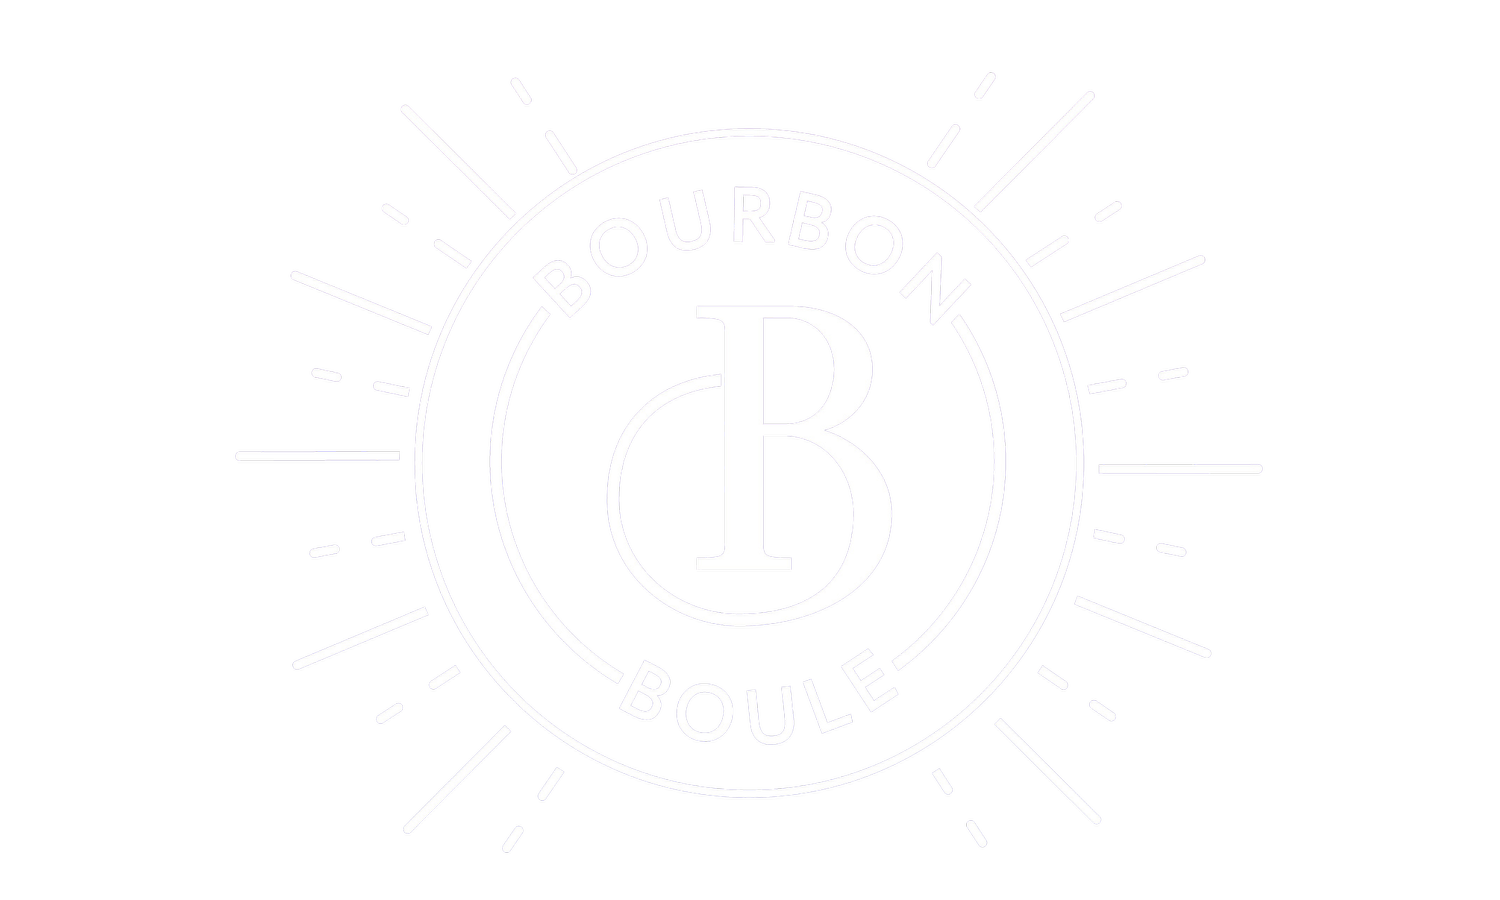 Black Bourbon Society presents Bourbon Boule